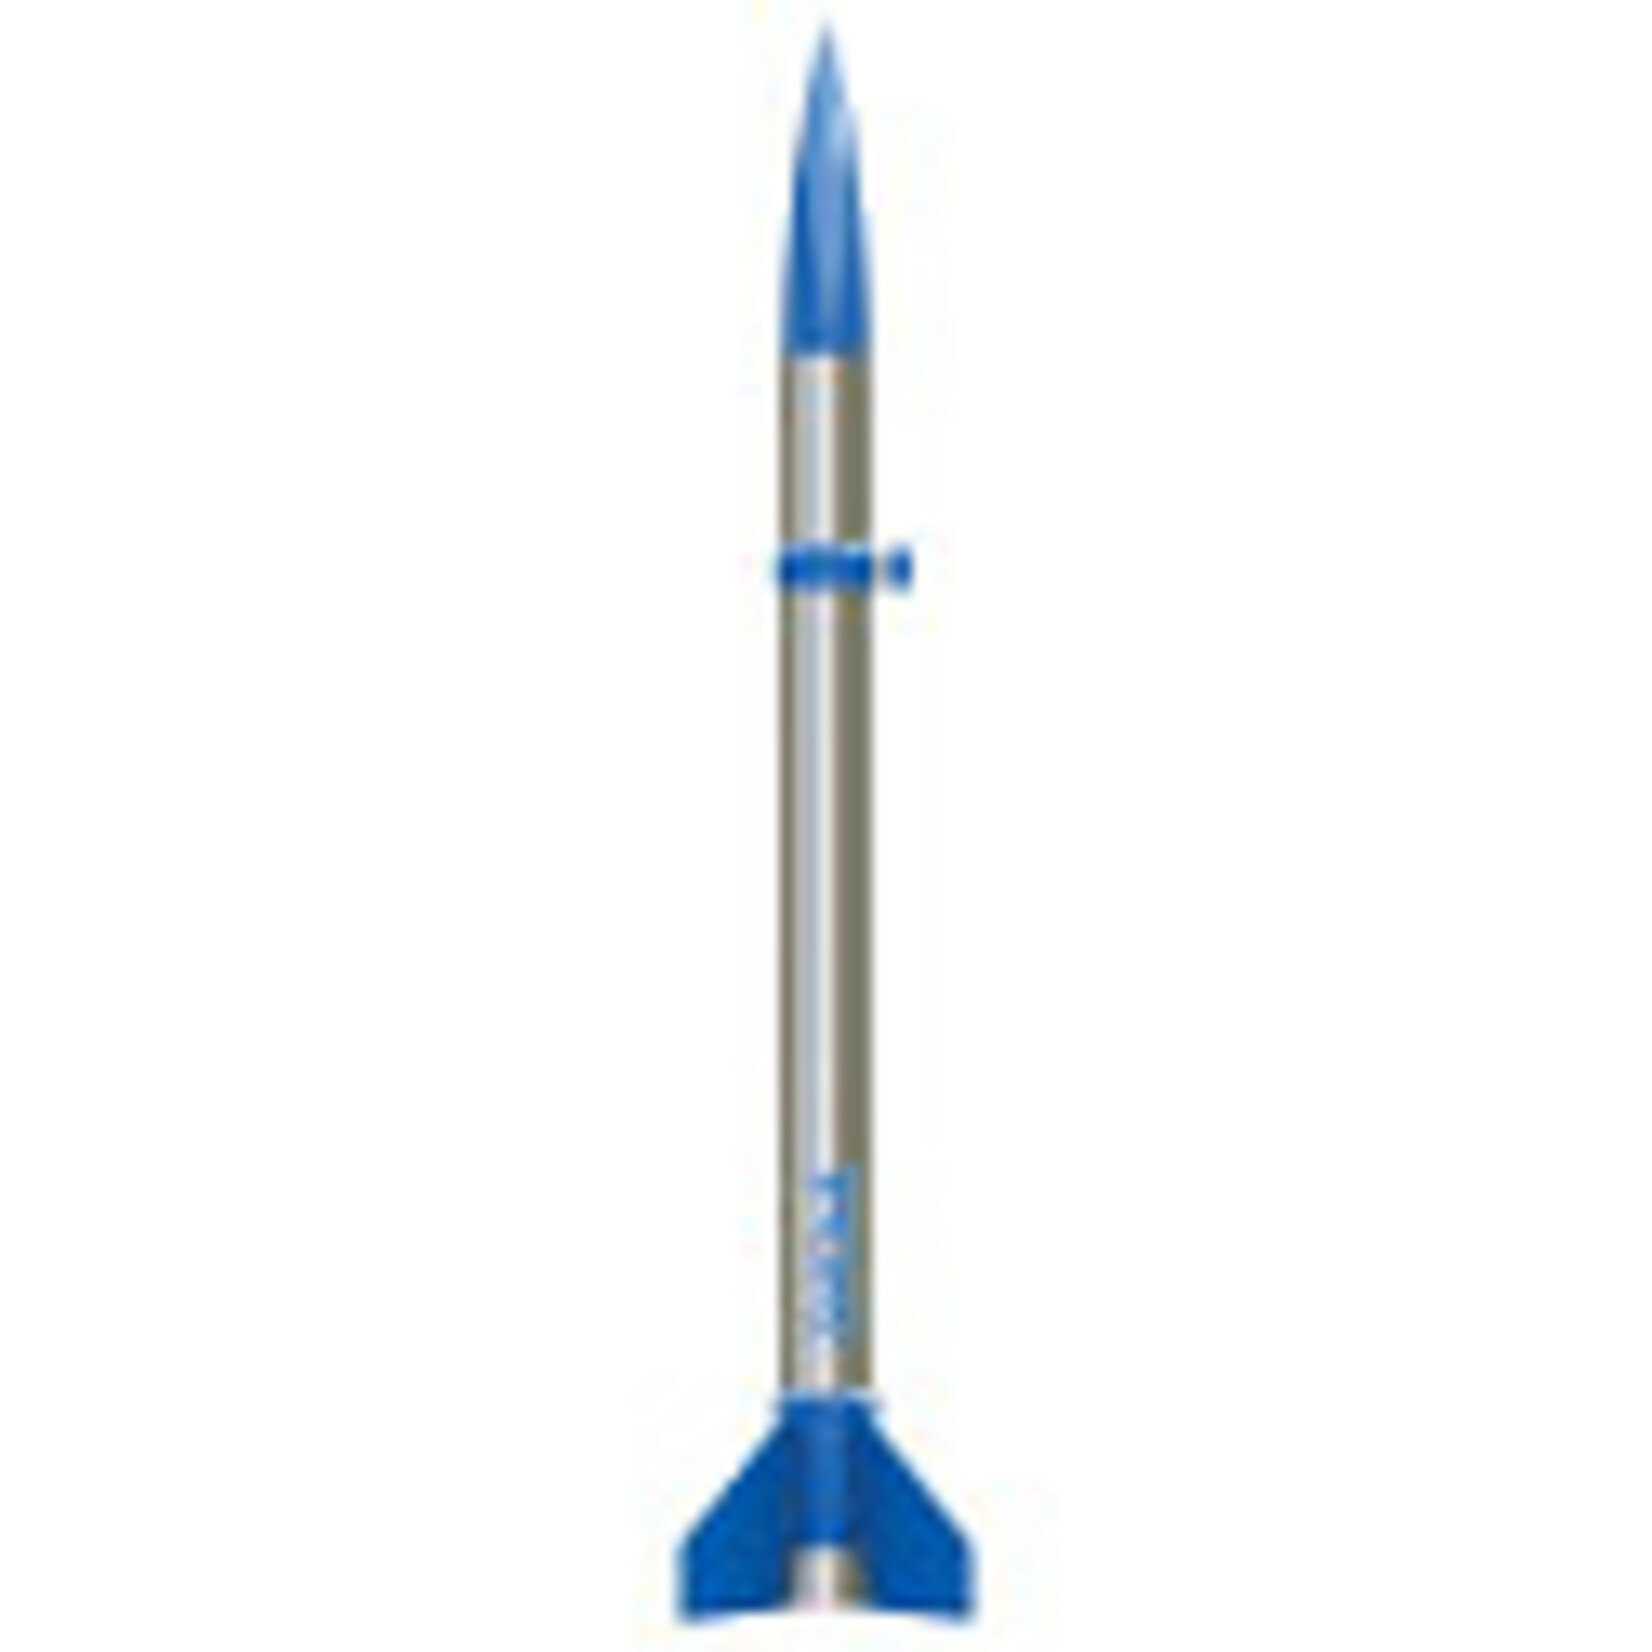 Estes Rockets EST0886  Gnome beginner kit